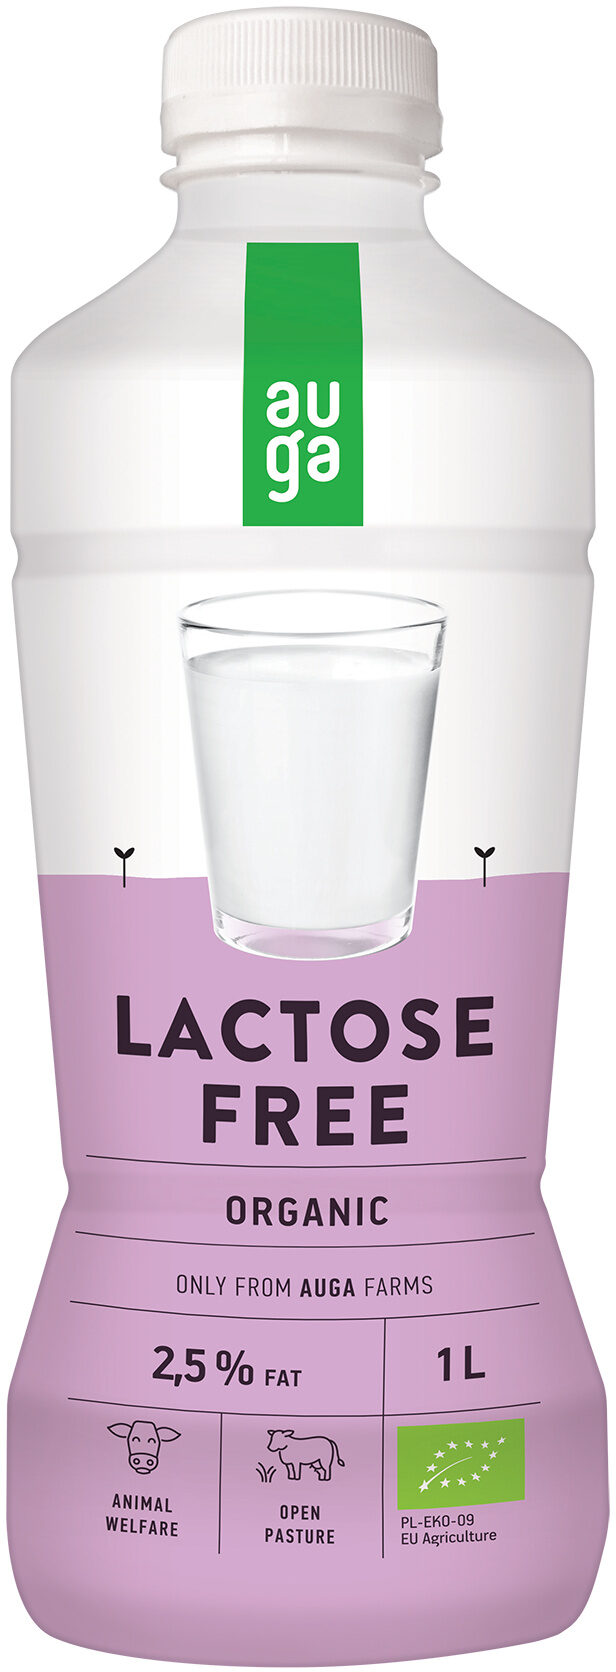 Organic Lactose Free Milk Drink - Product